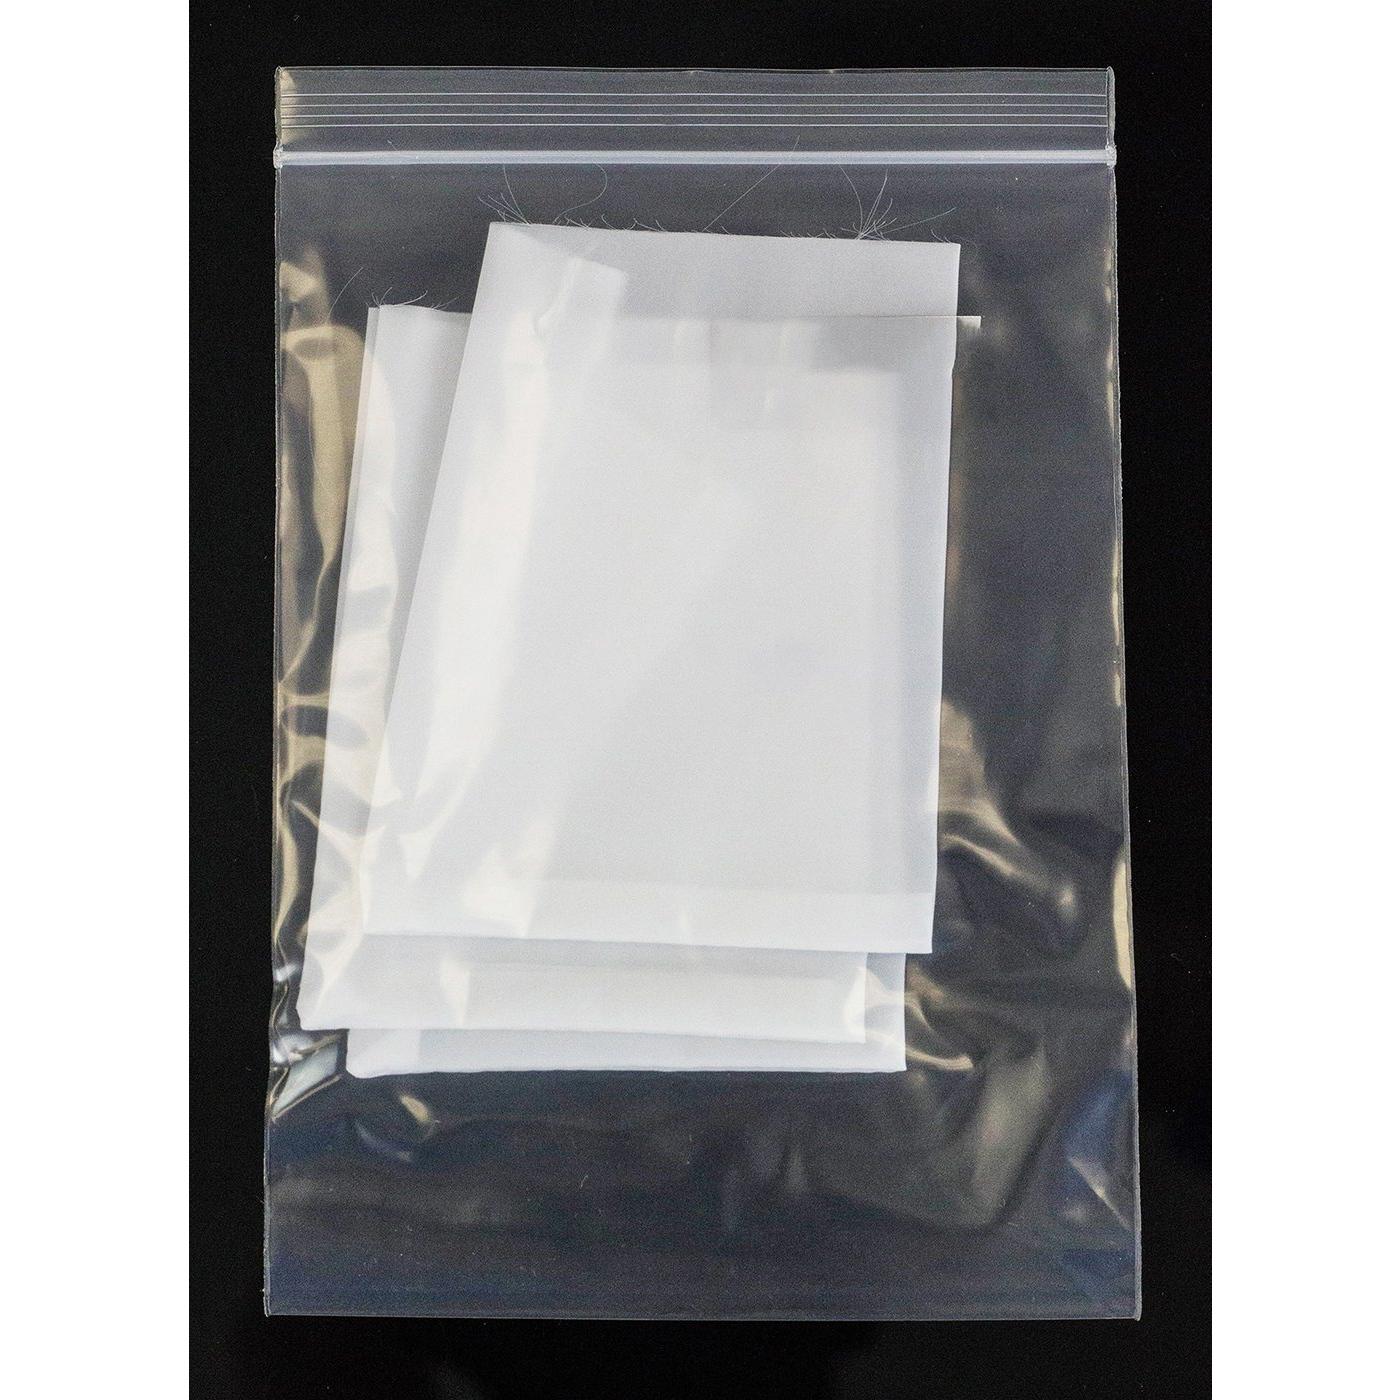 BVV - Small Rosin Filter Bags - 10 Pack